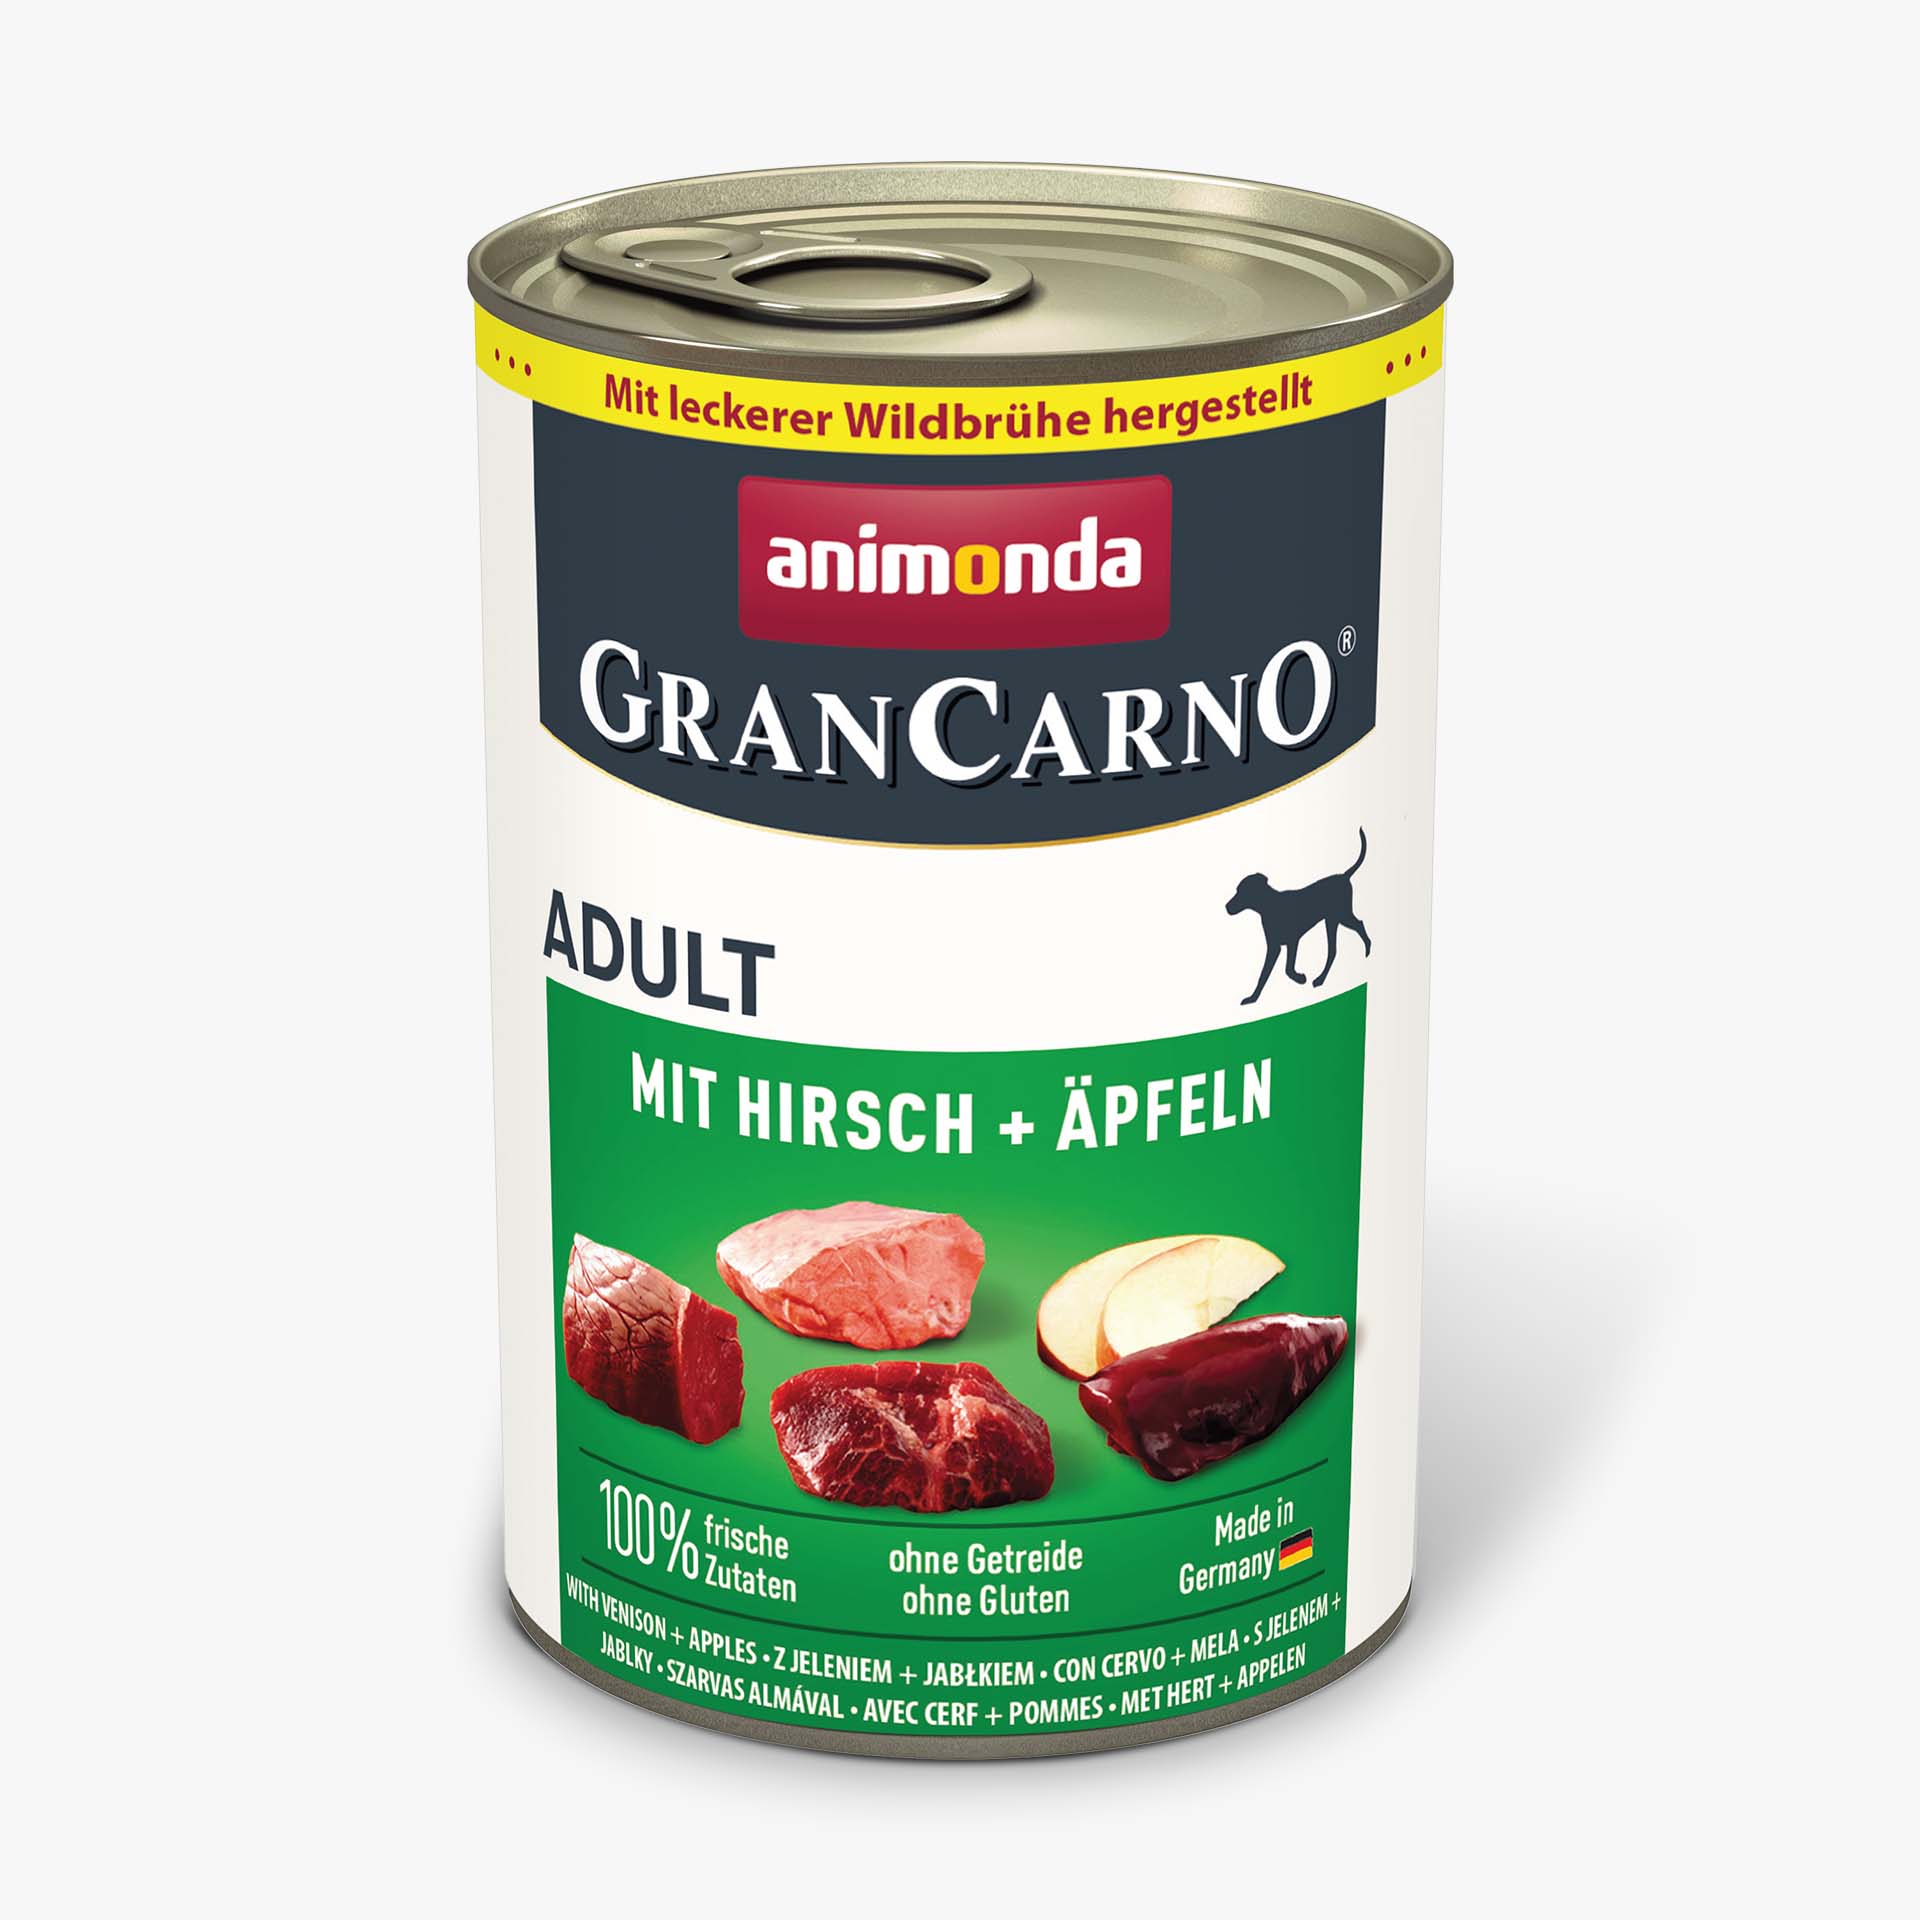 GranCarno Adult mit Hirsch + Äpfeln